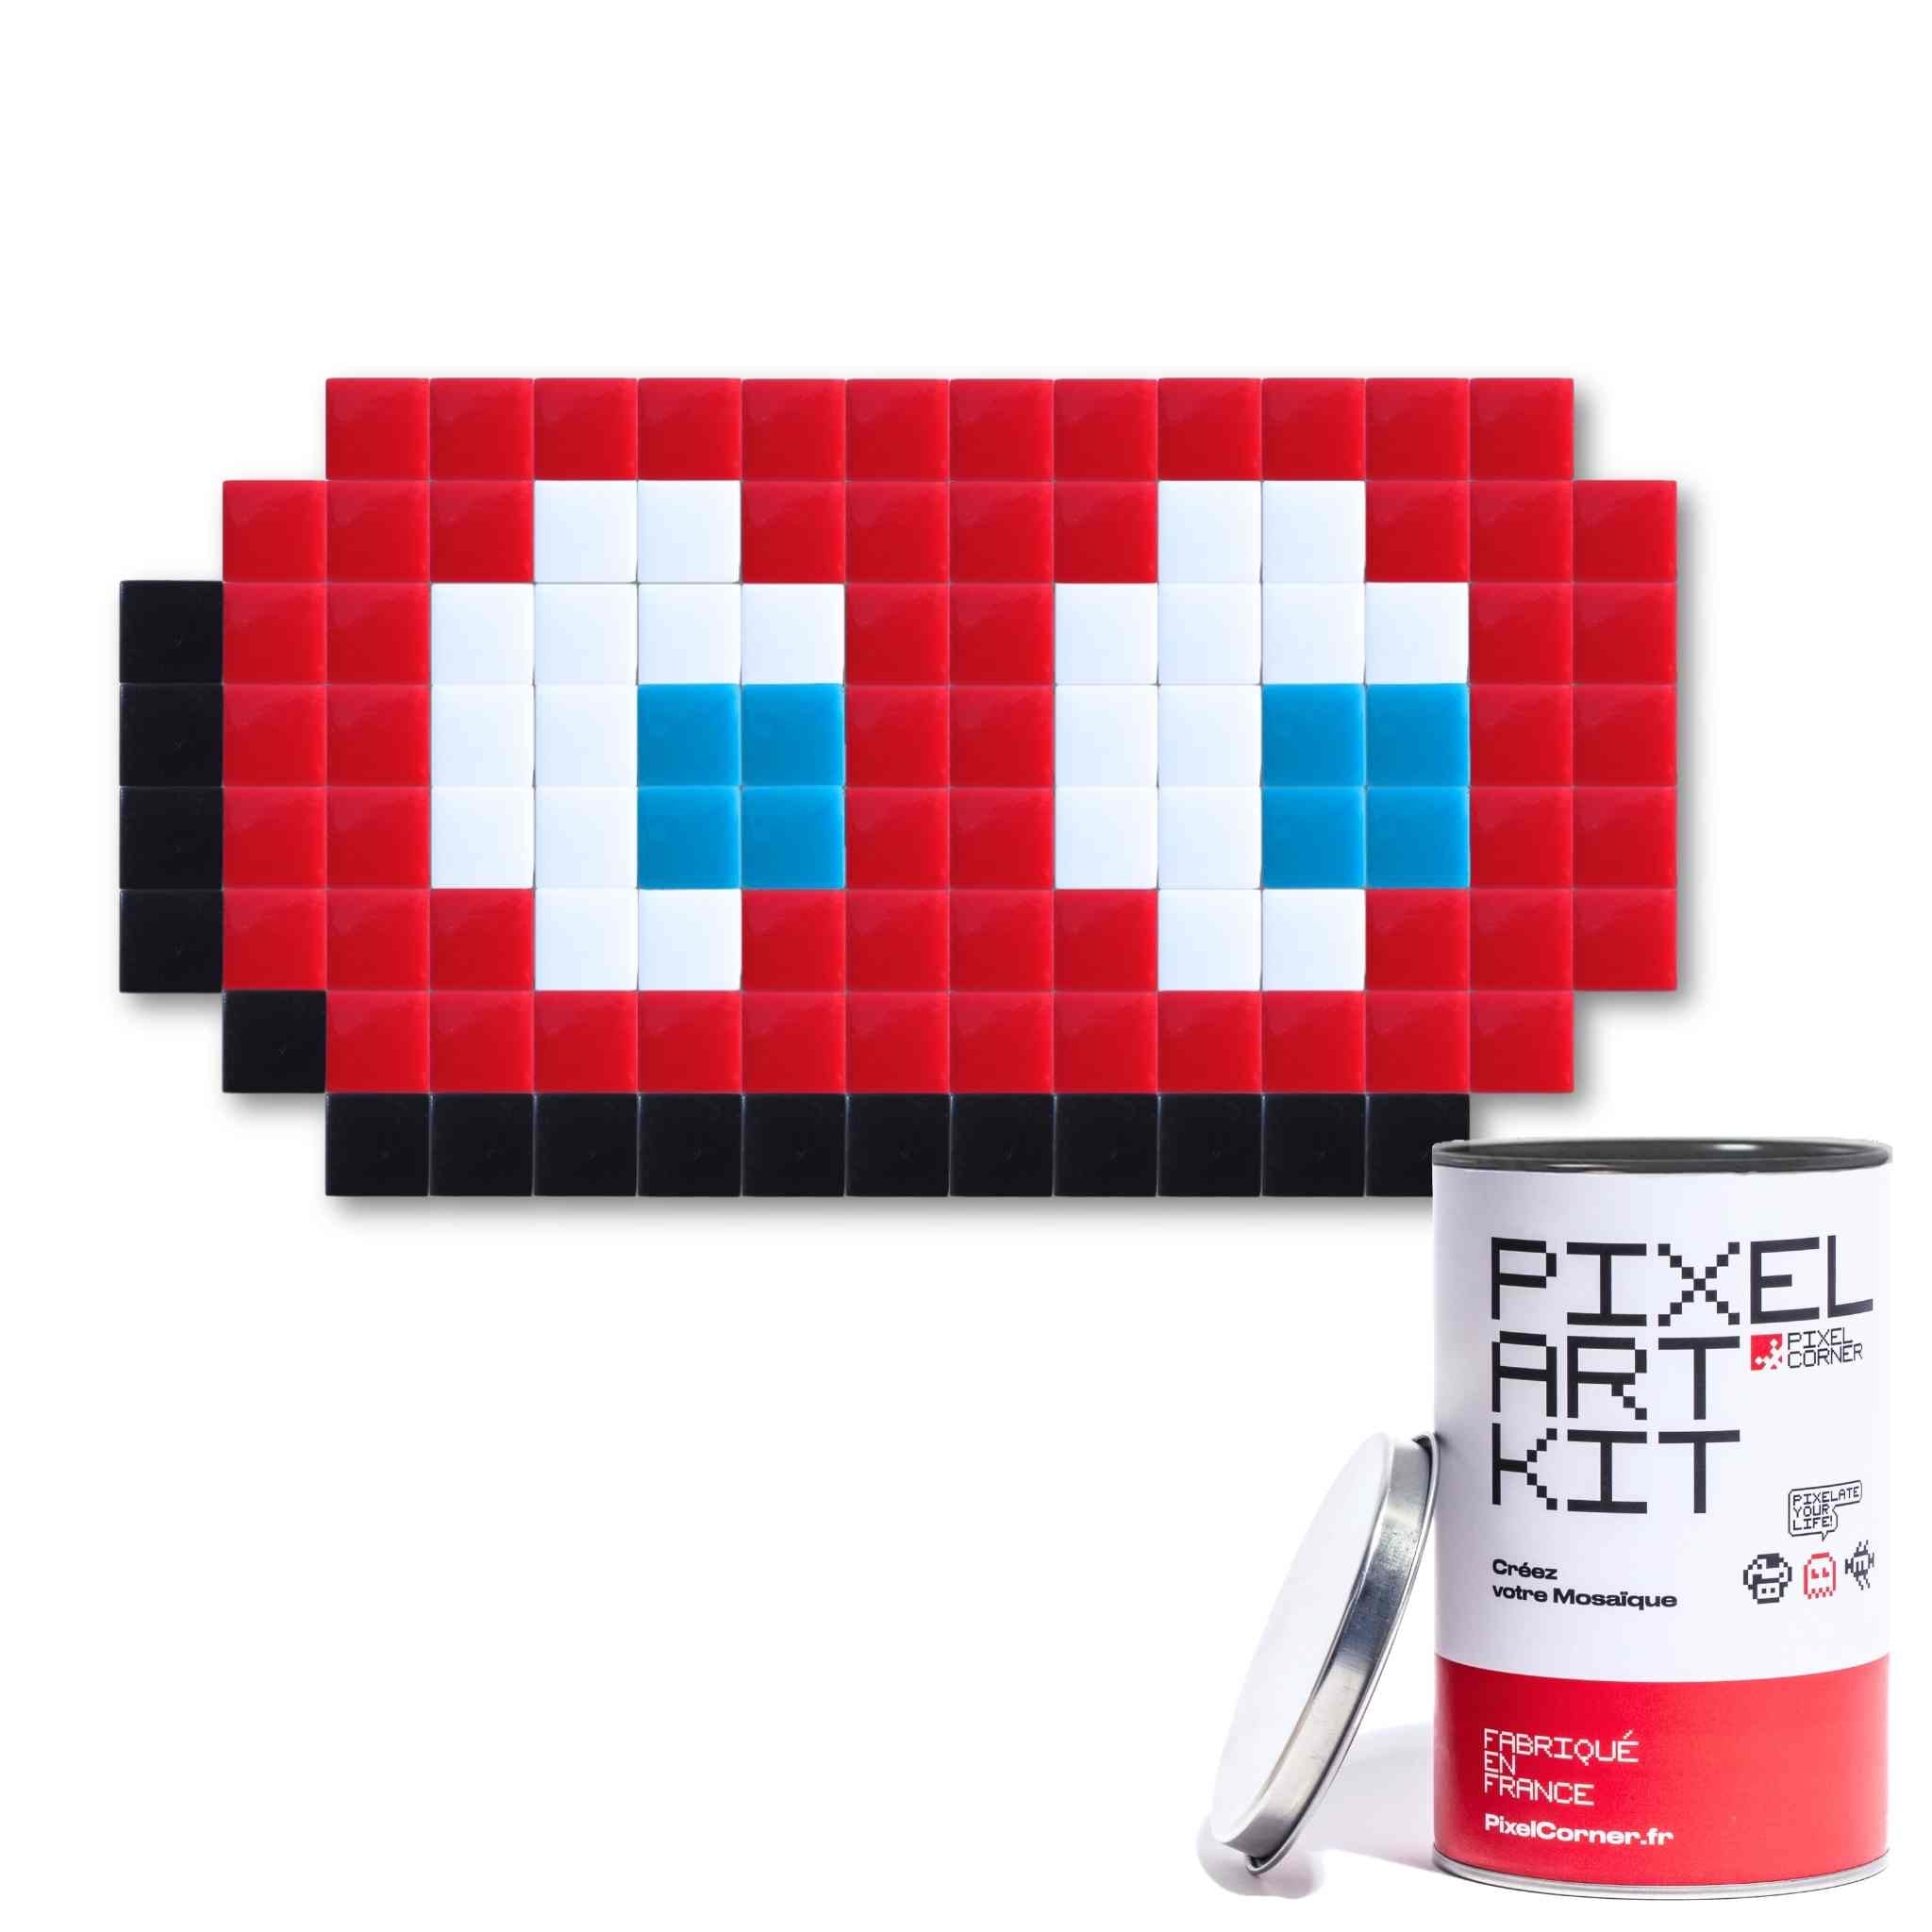 Pixel Art Kit "The Eyes" par Pixel Corner - Kits de loisirs créatifs